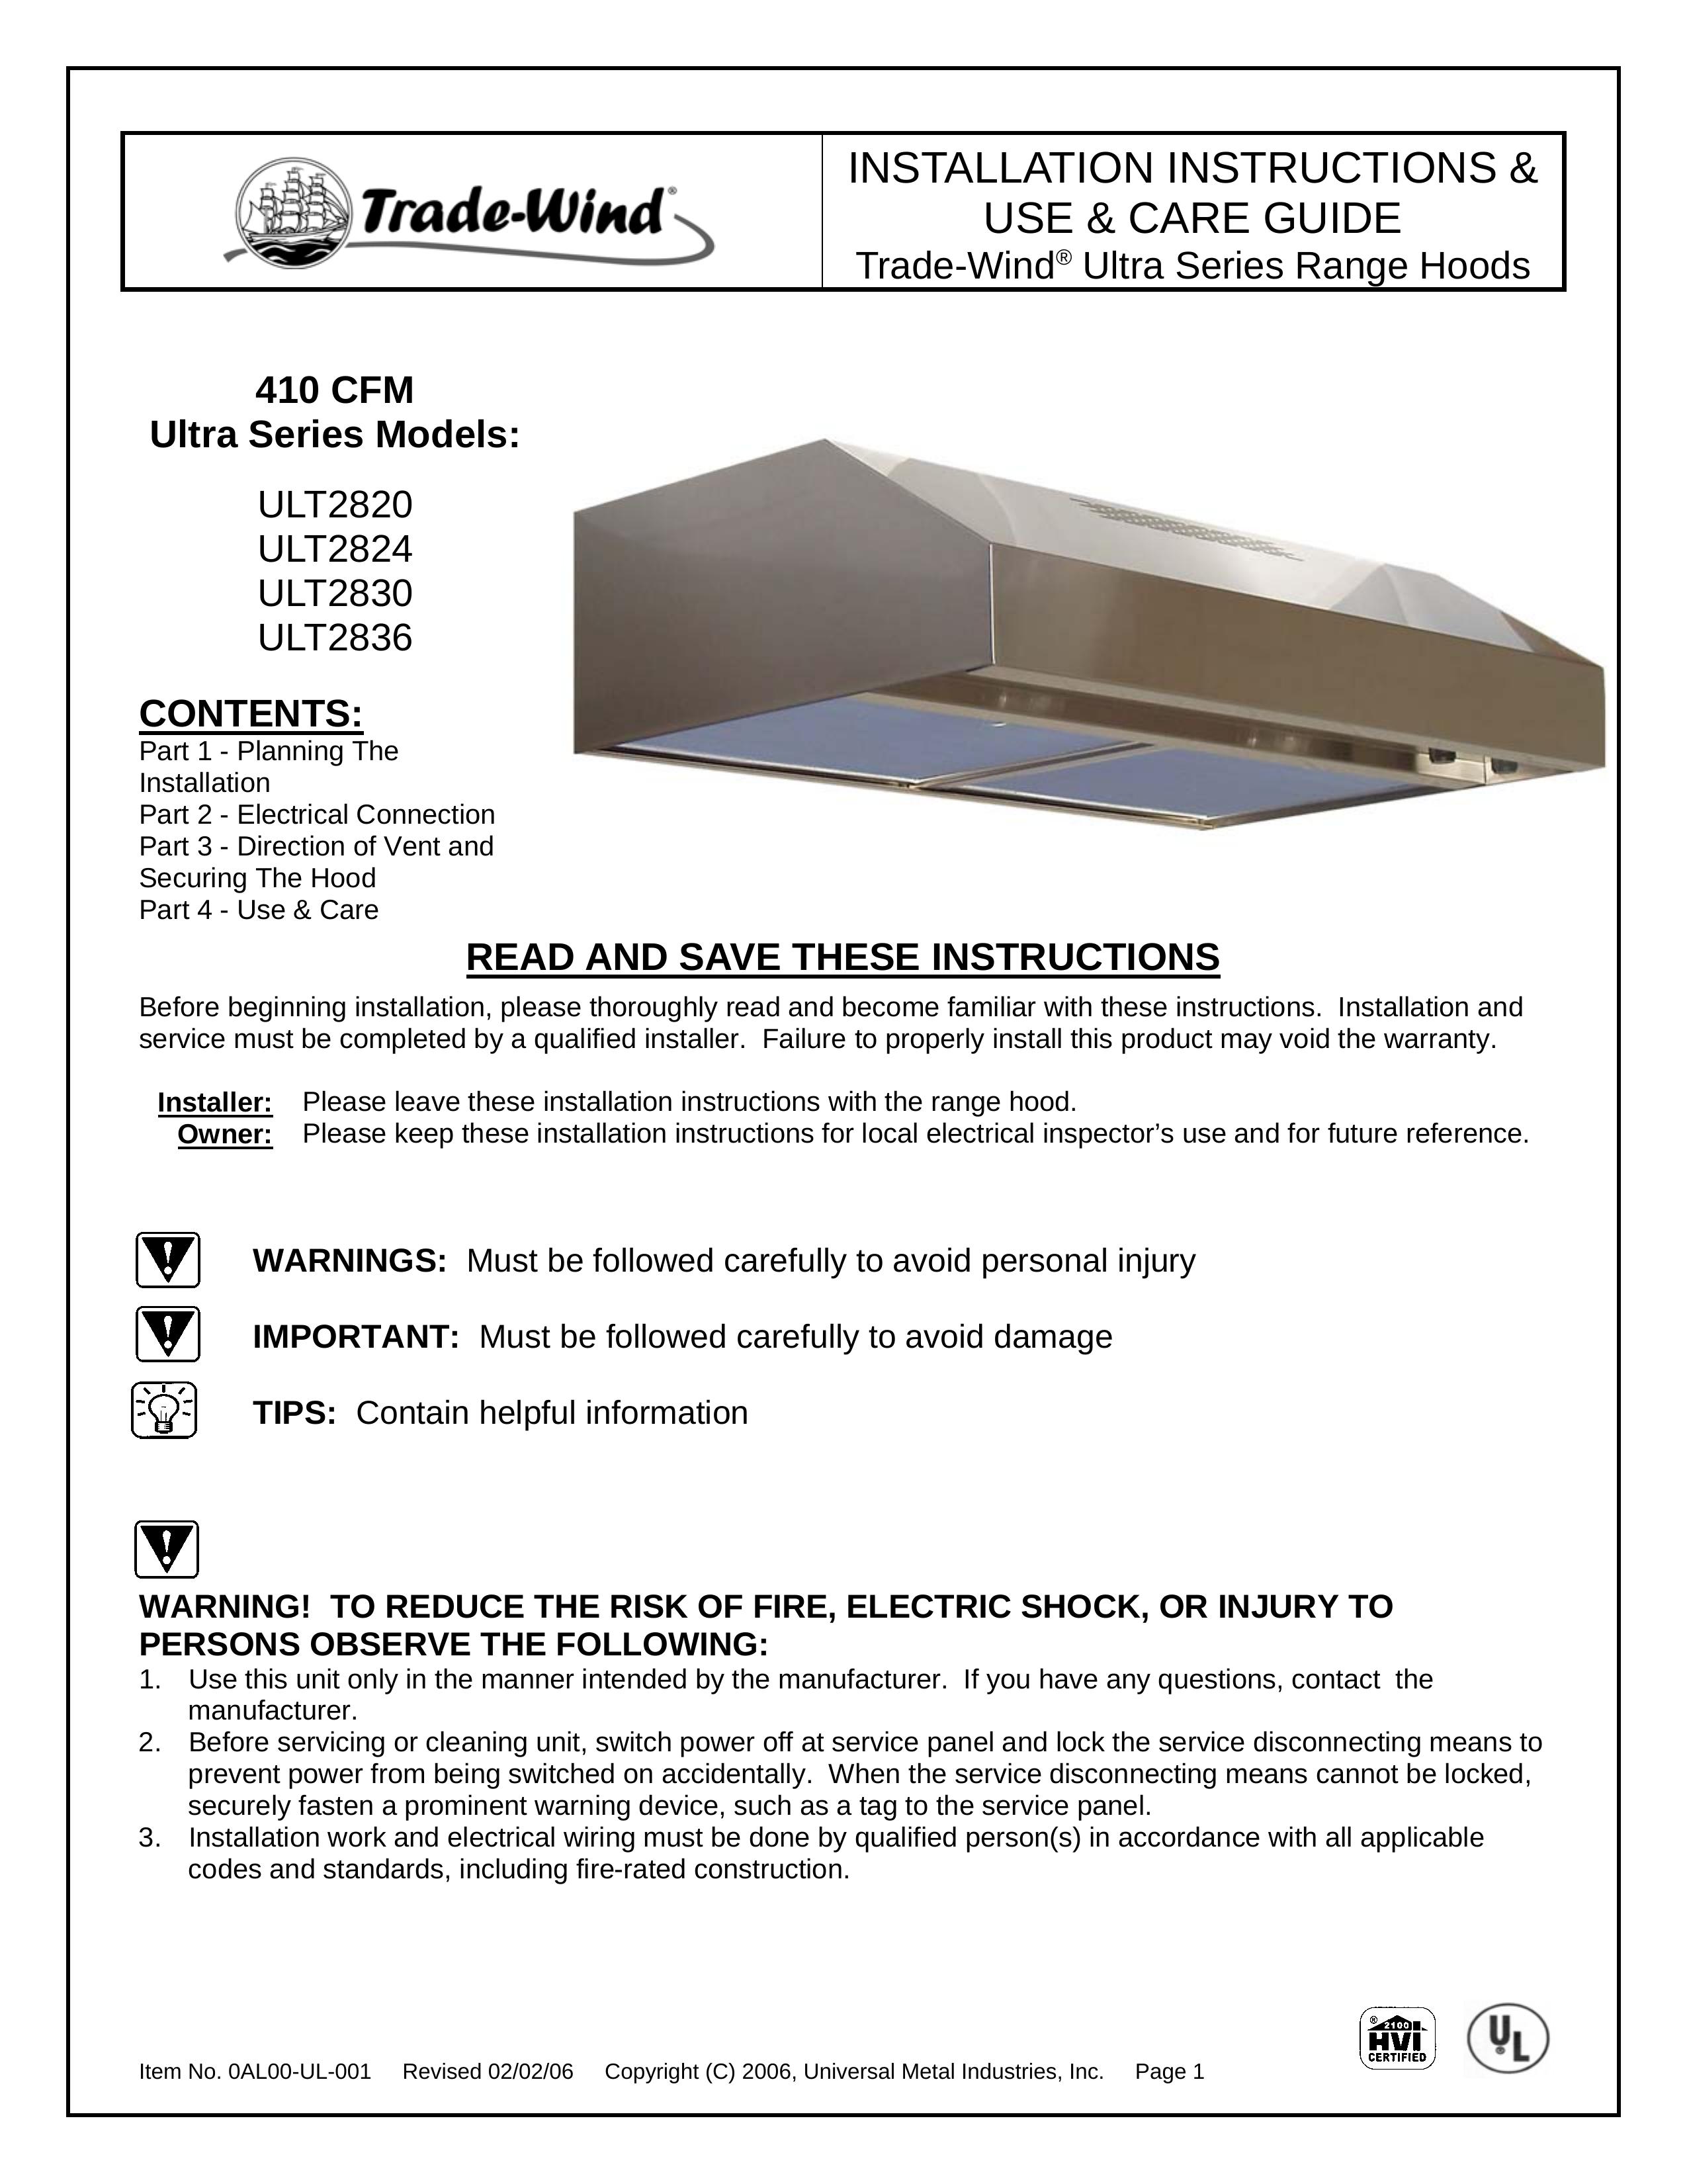 Universal Metal Industries ULT2824 Ventilation Hood User Manual